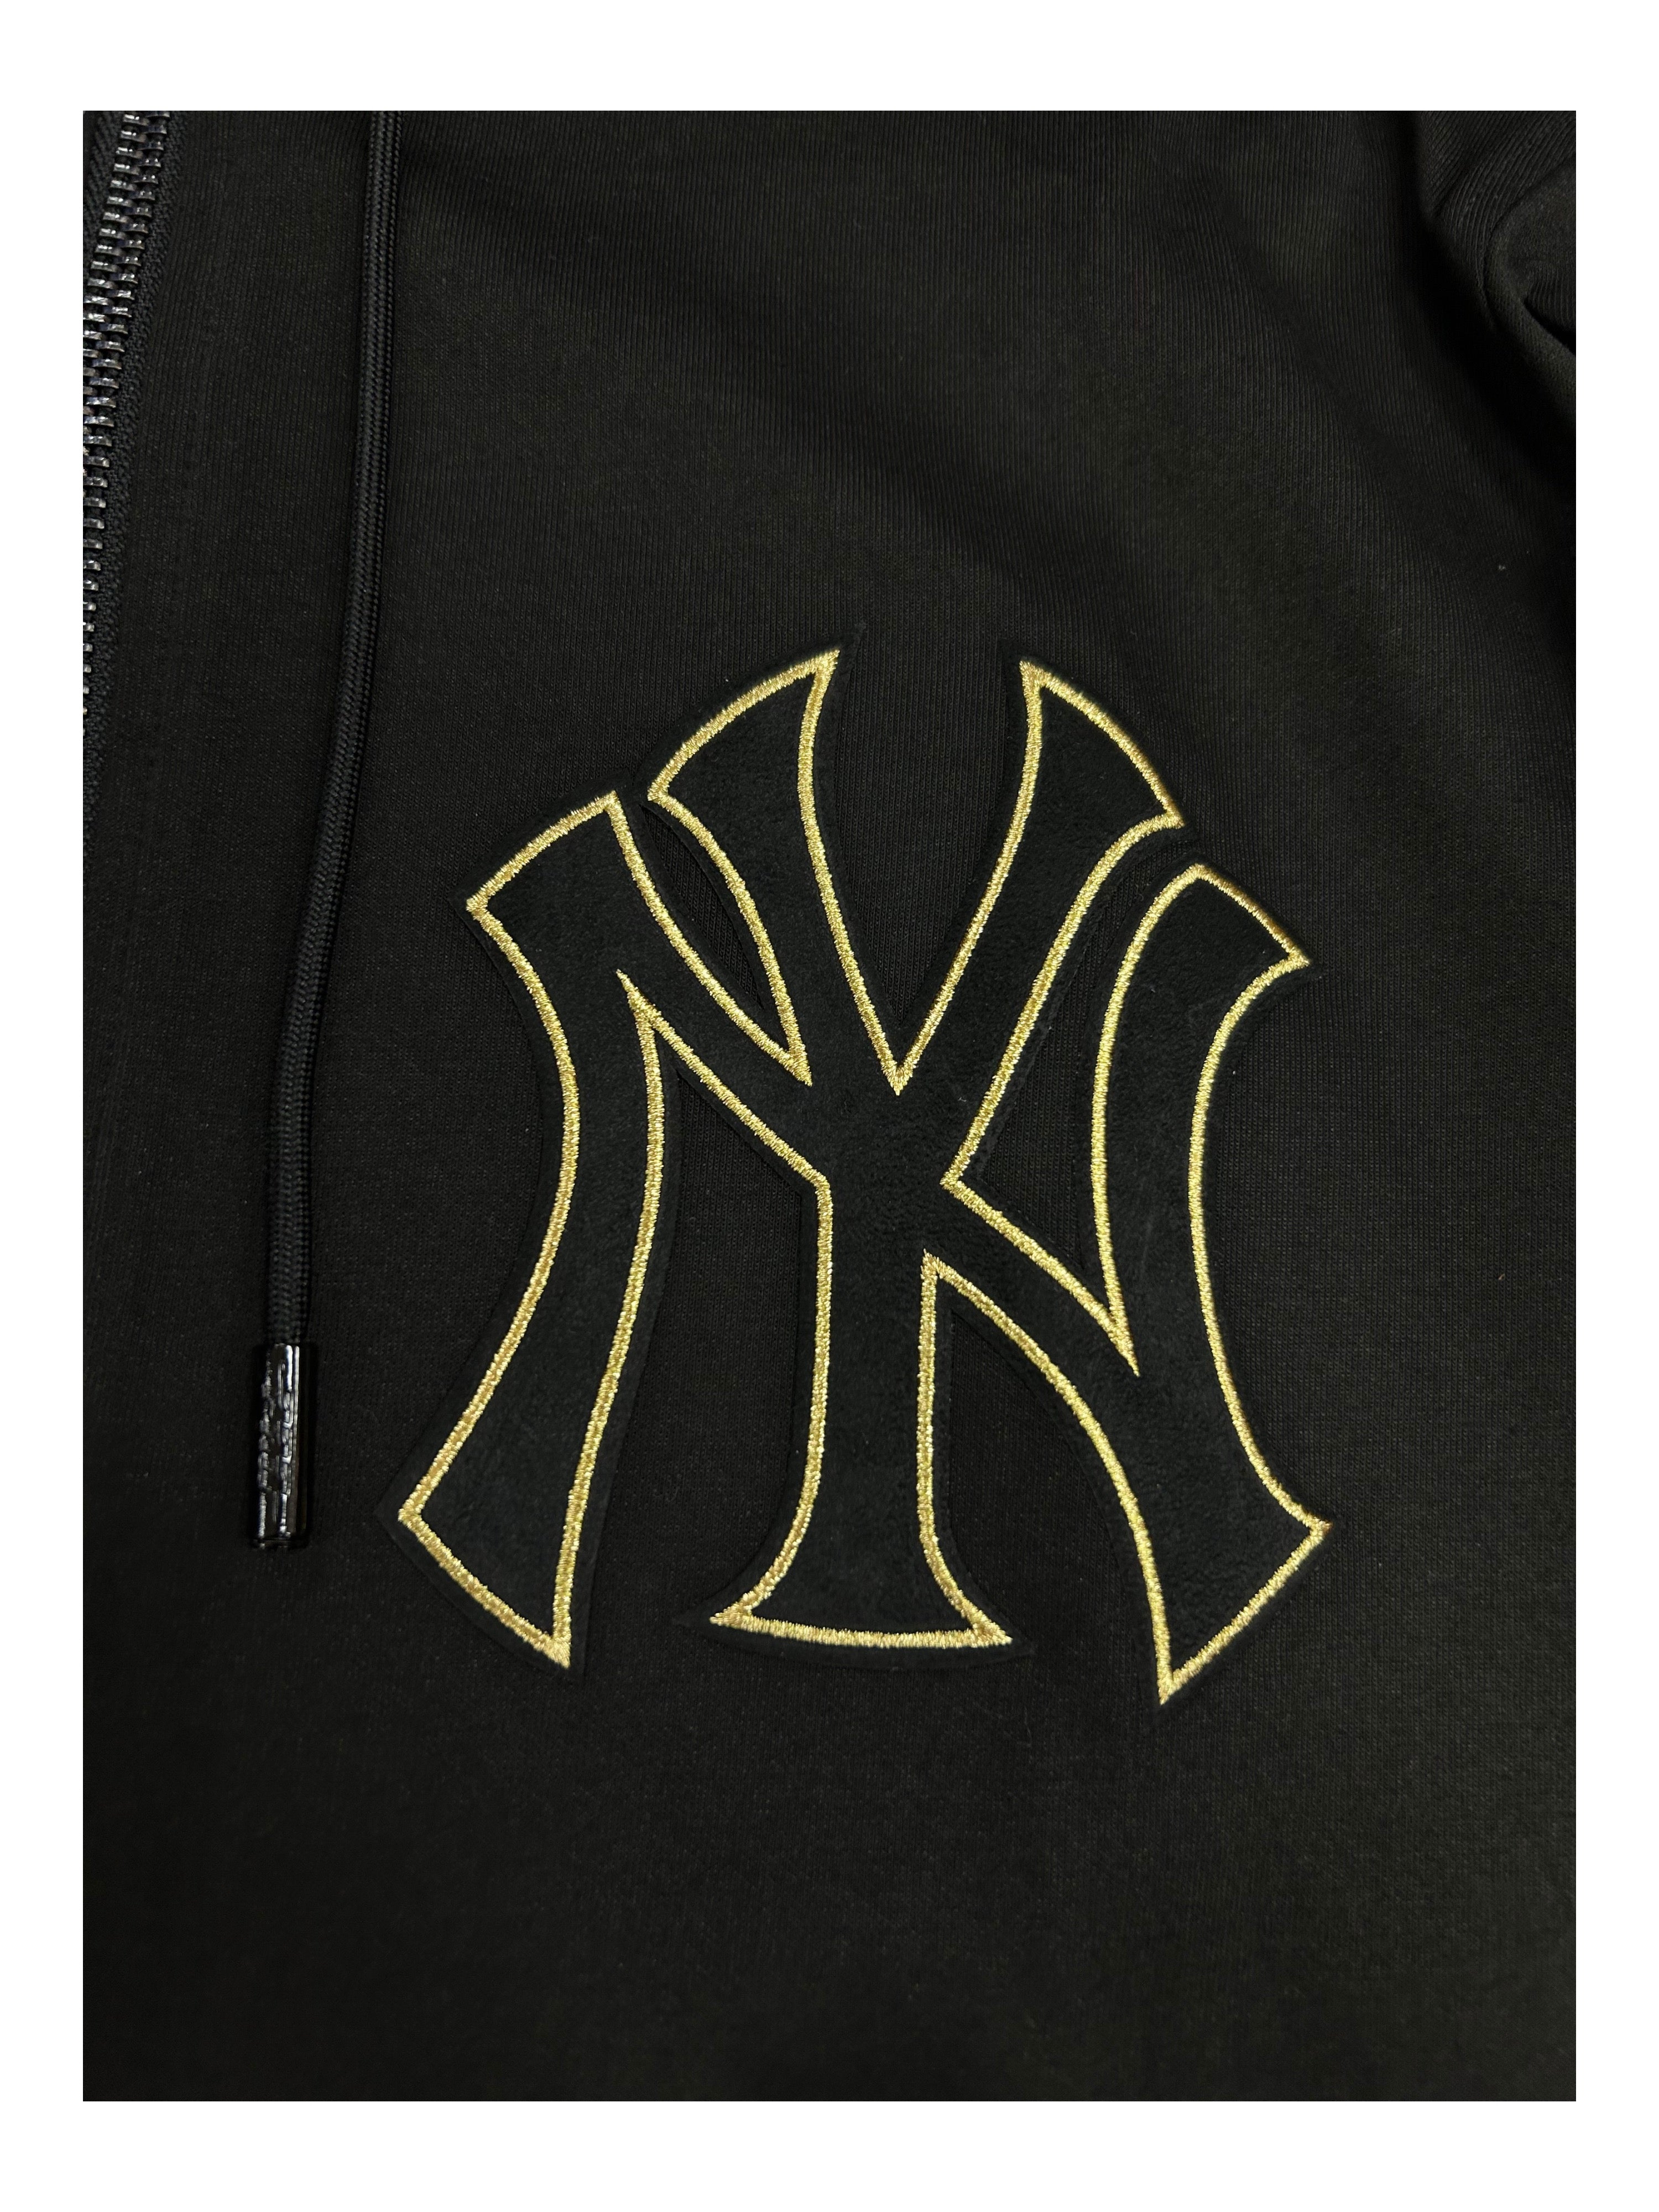 Pro Standard New York Yankees Sweatsuit (Black/Gold)